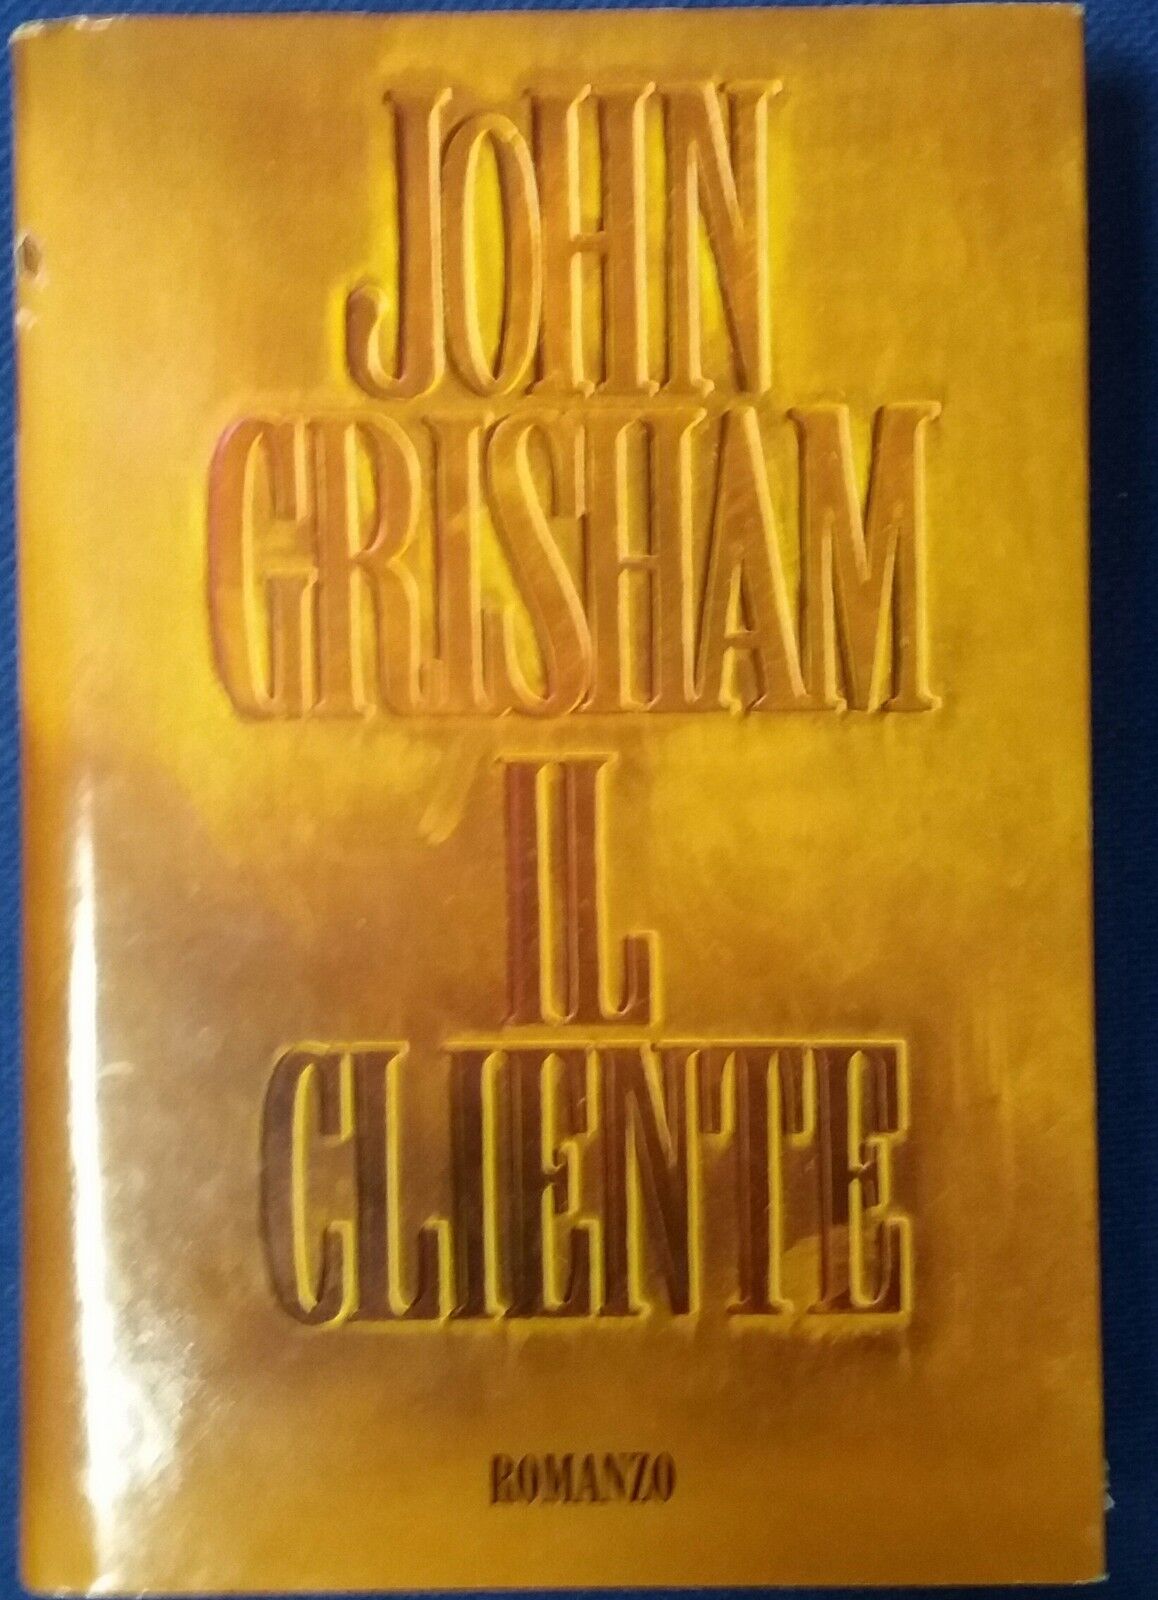 IL CLIENTE - JOHN GRISHAM - 1993 - MONDADORI - M